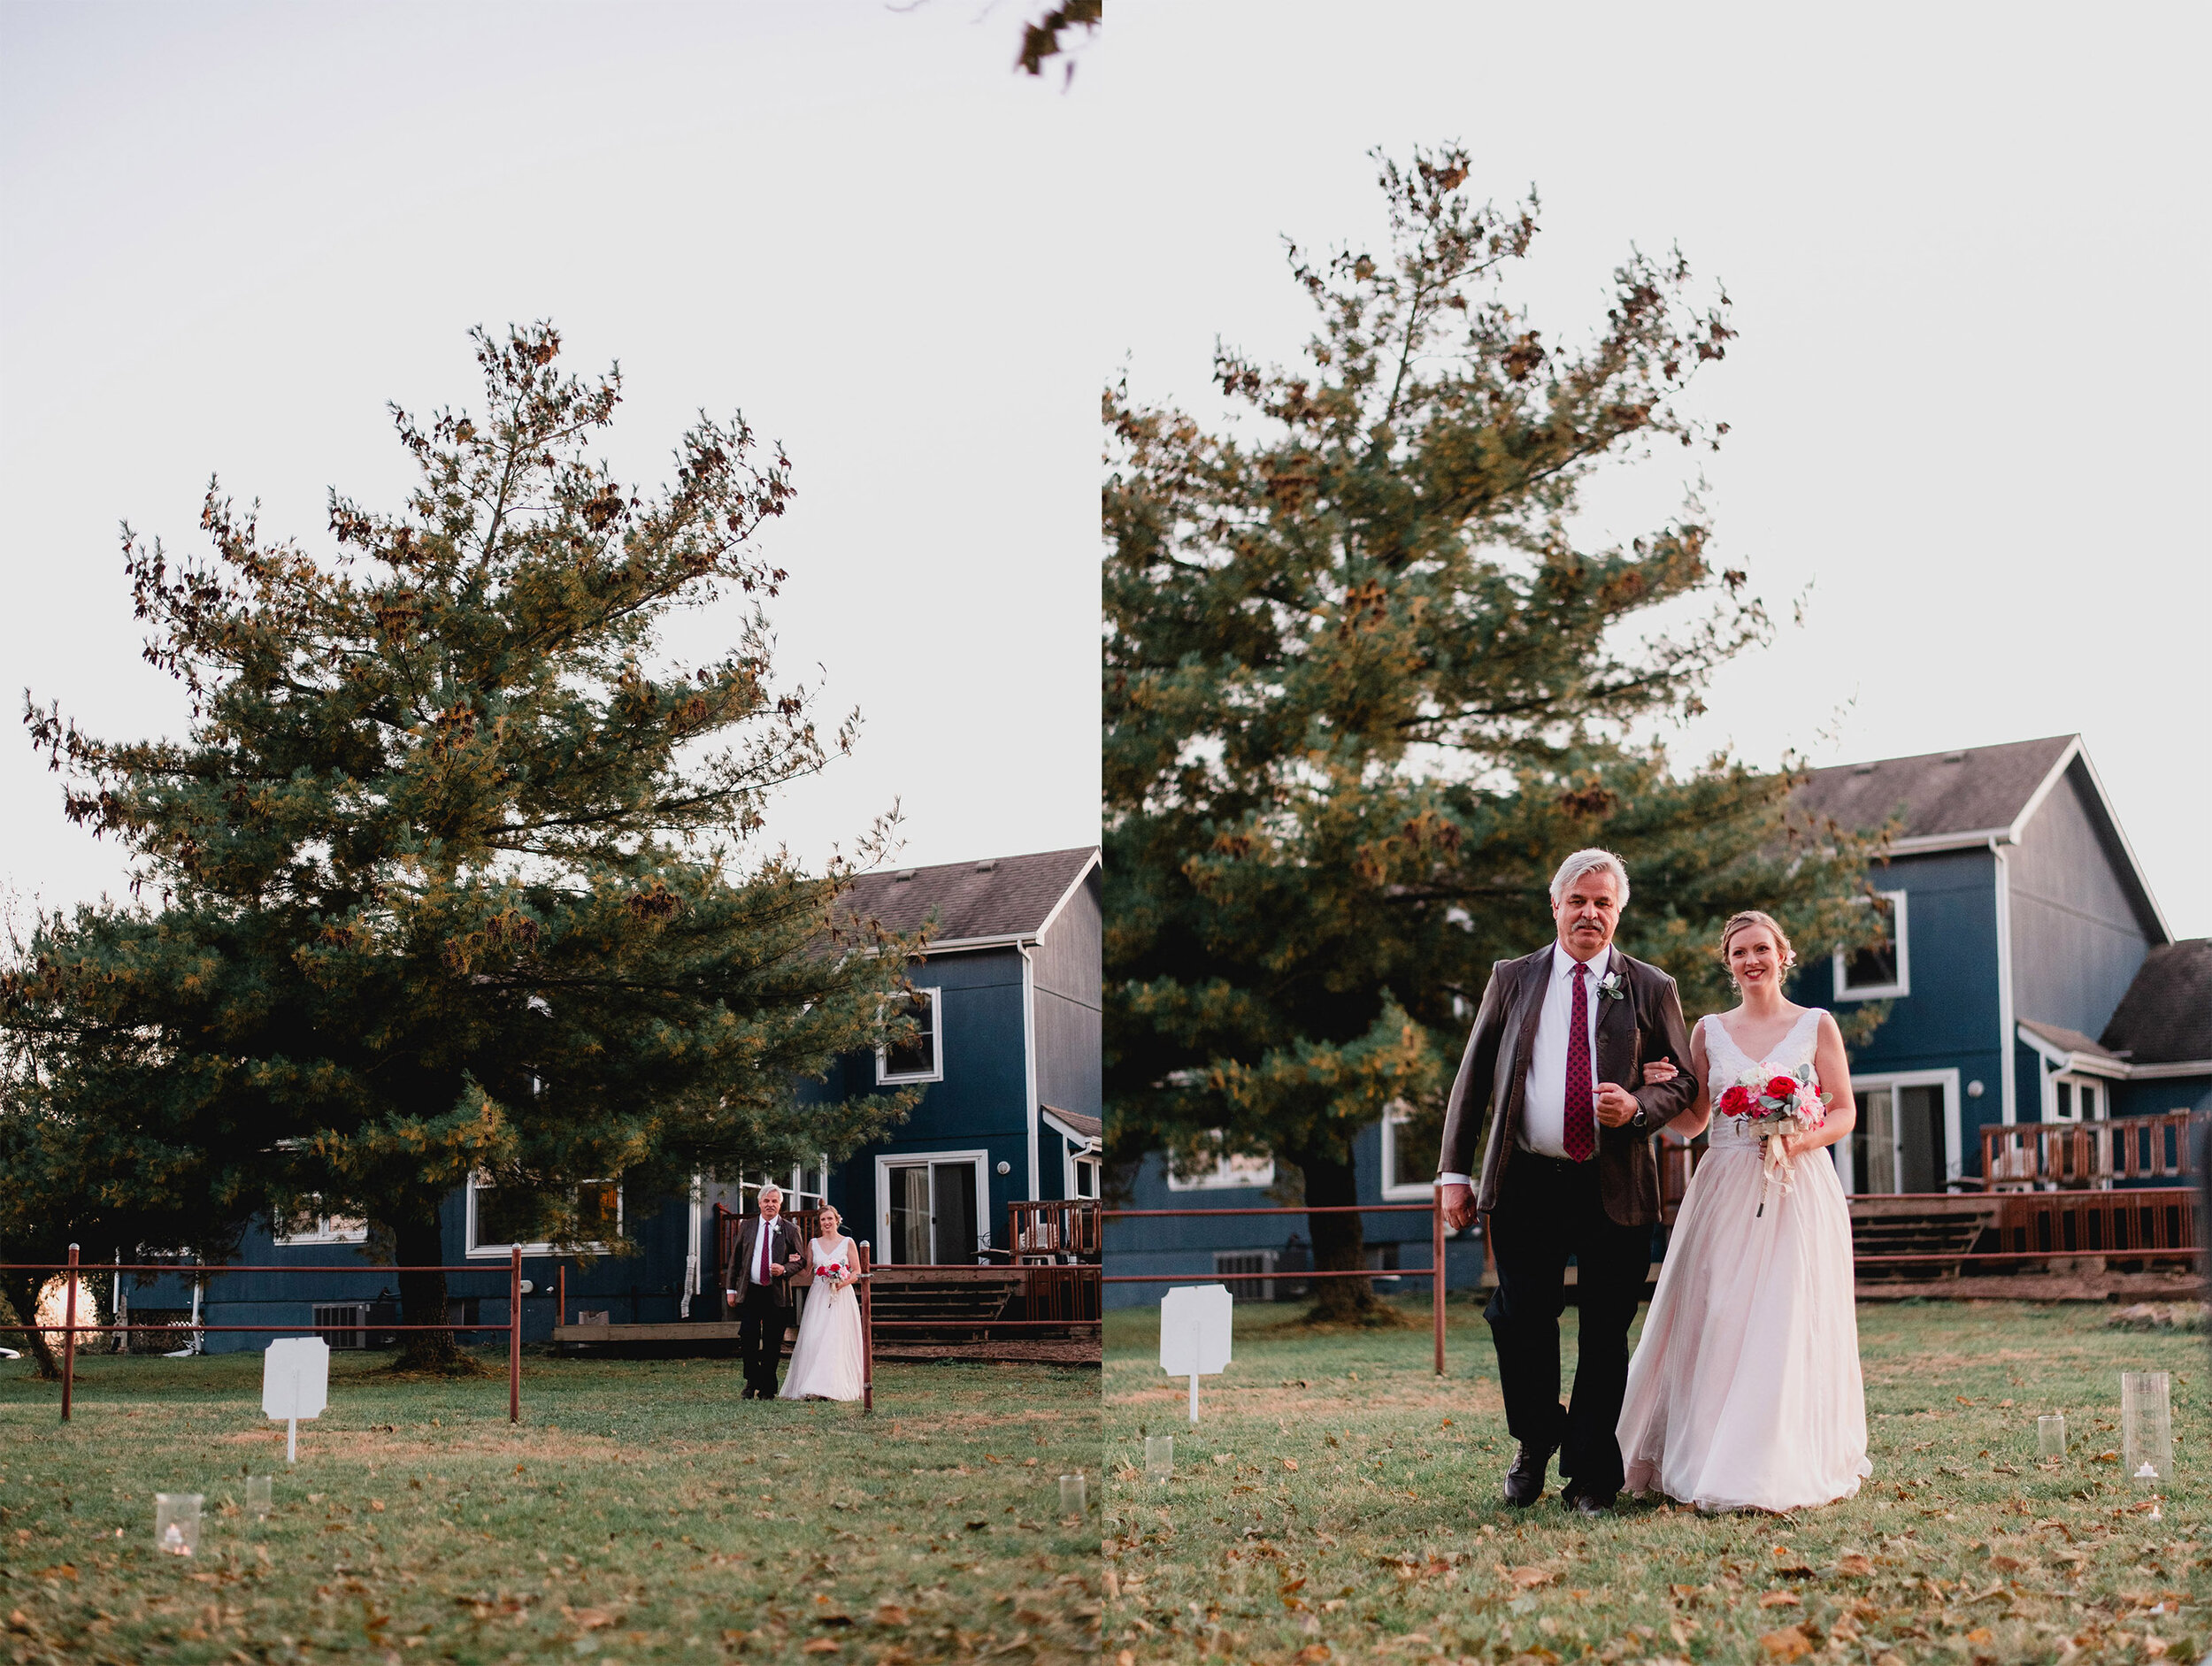 Kansas City Small Intimate Wedding Photographer Heartfelt and emotional Photography020.jpg